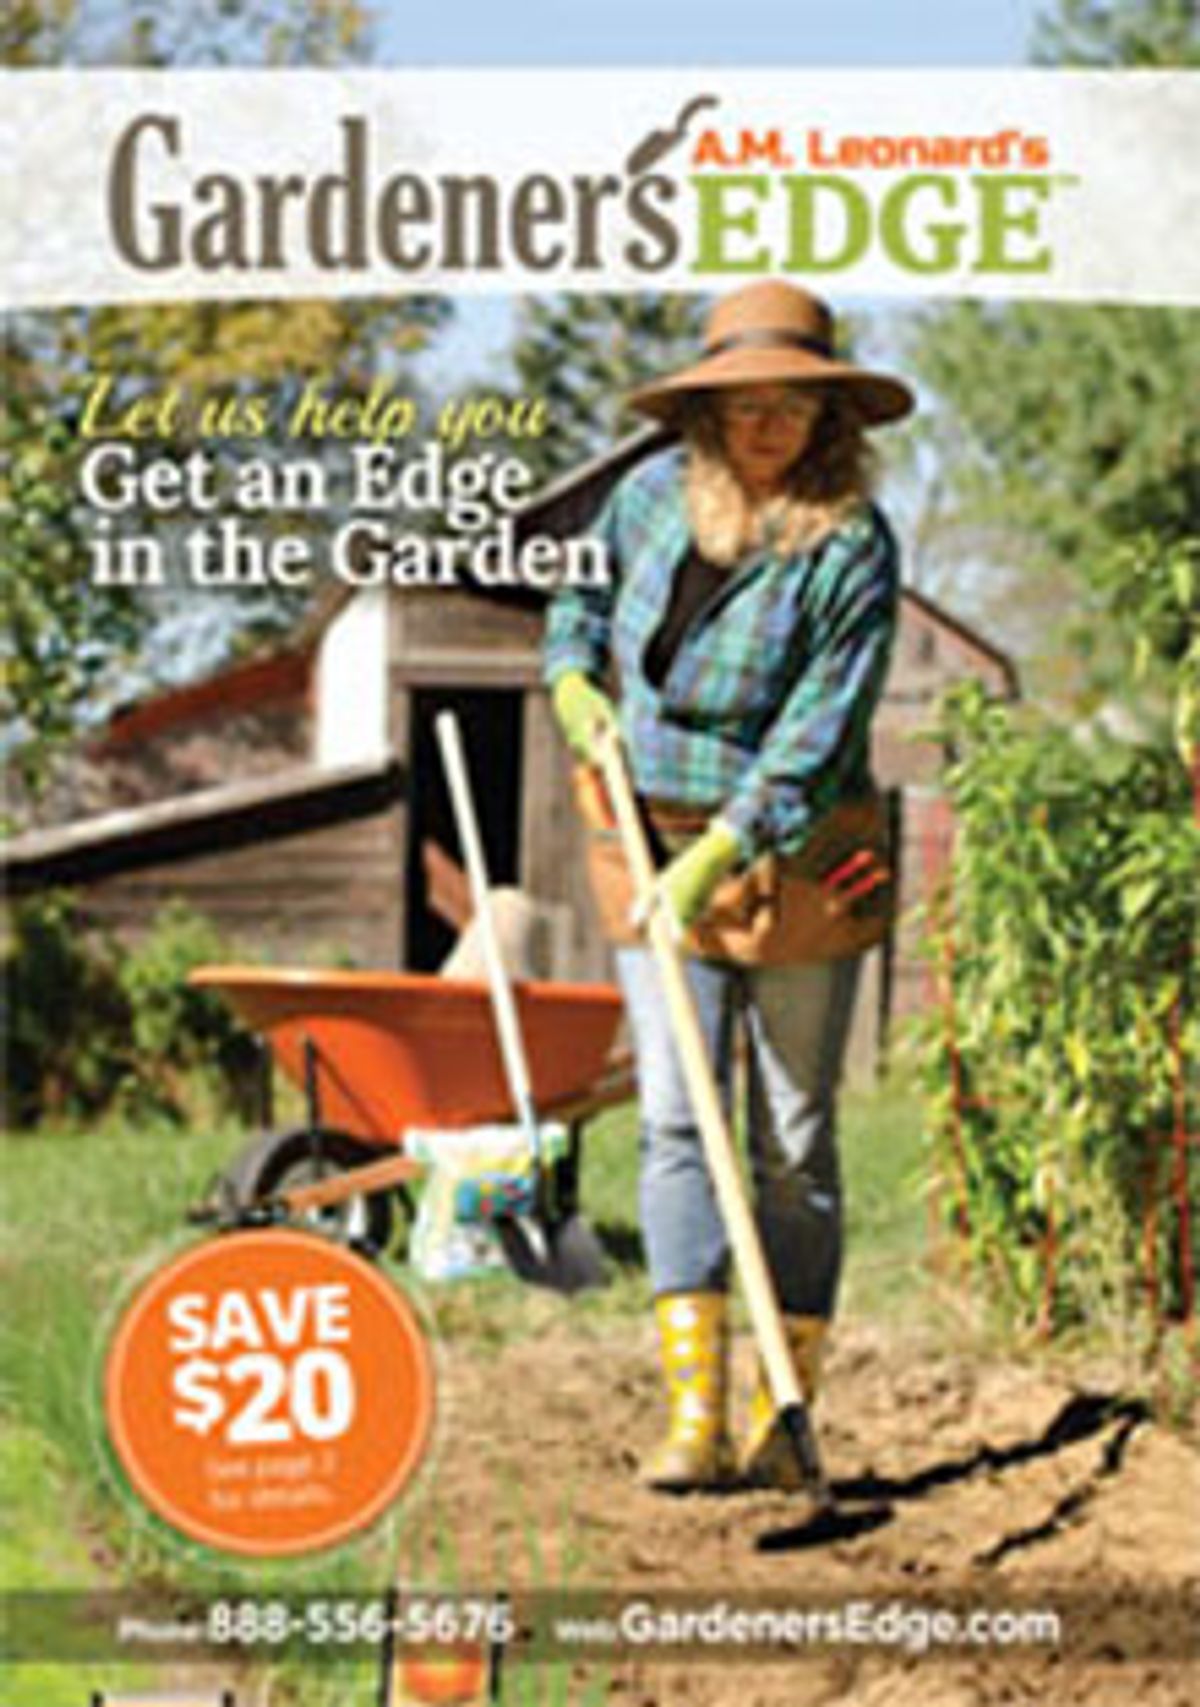 Gardener's Supply Company Coupon Code / 15 Off Gardeners Edge Coupon